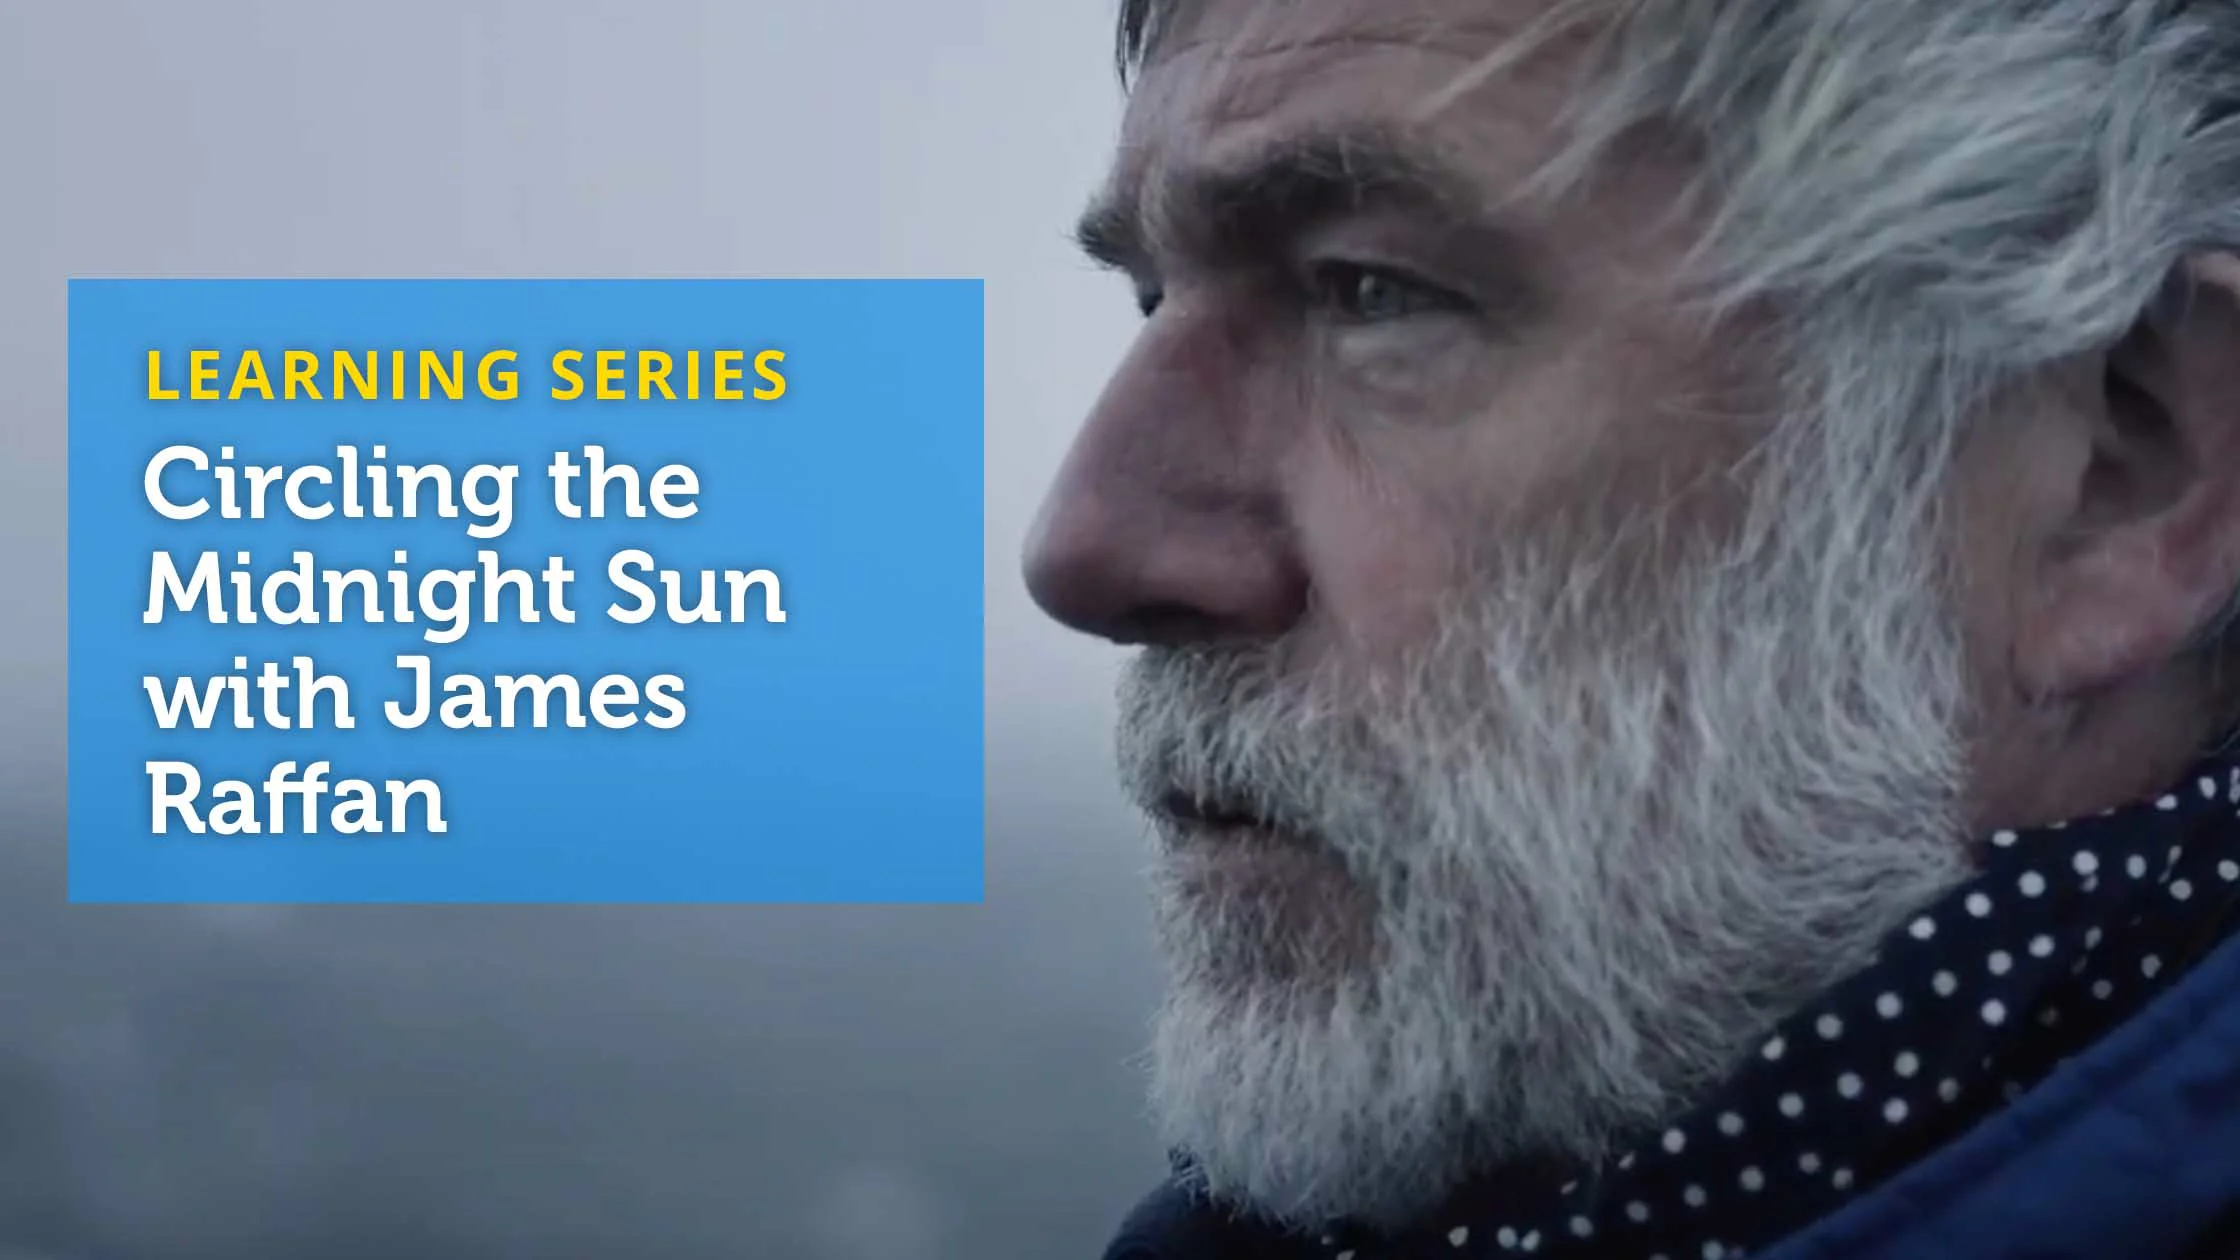 James Raffan - Circling the Midnight Sun on Vimeo